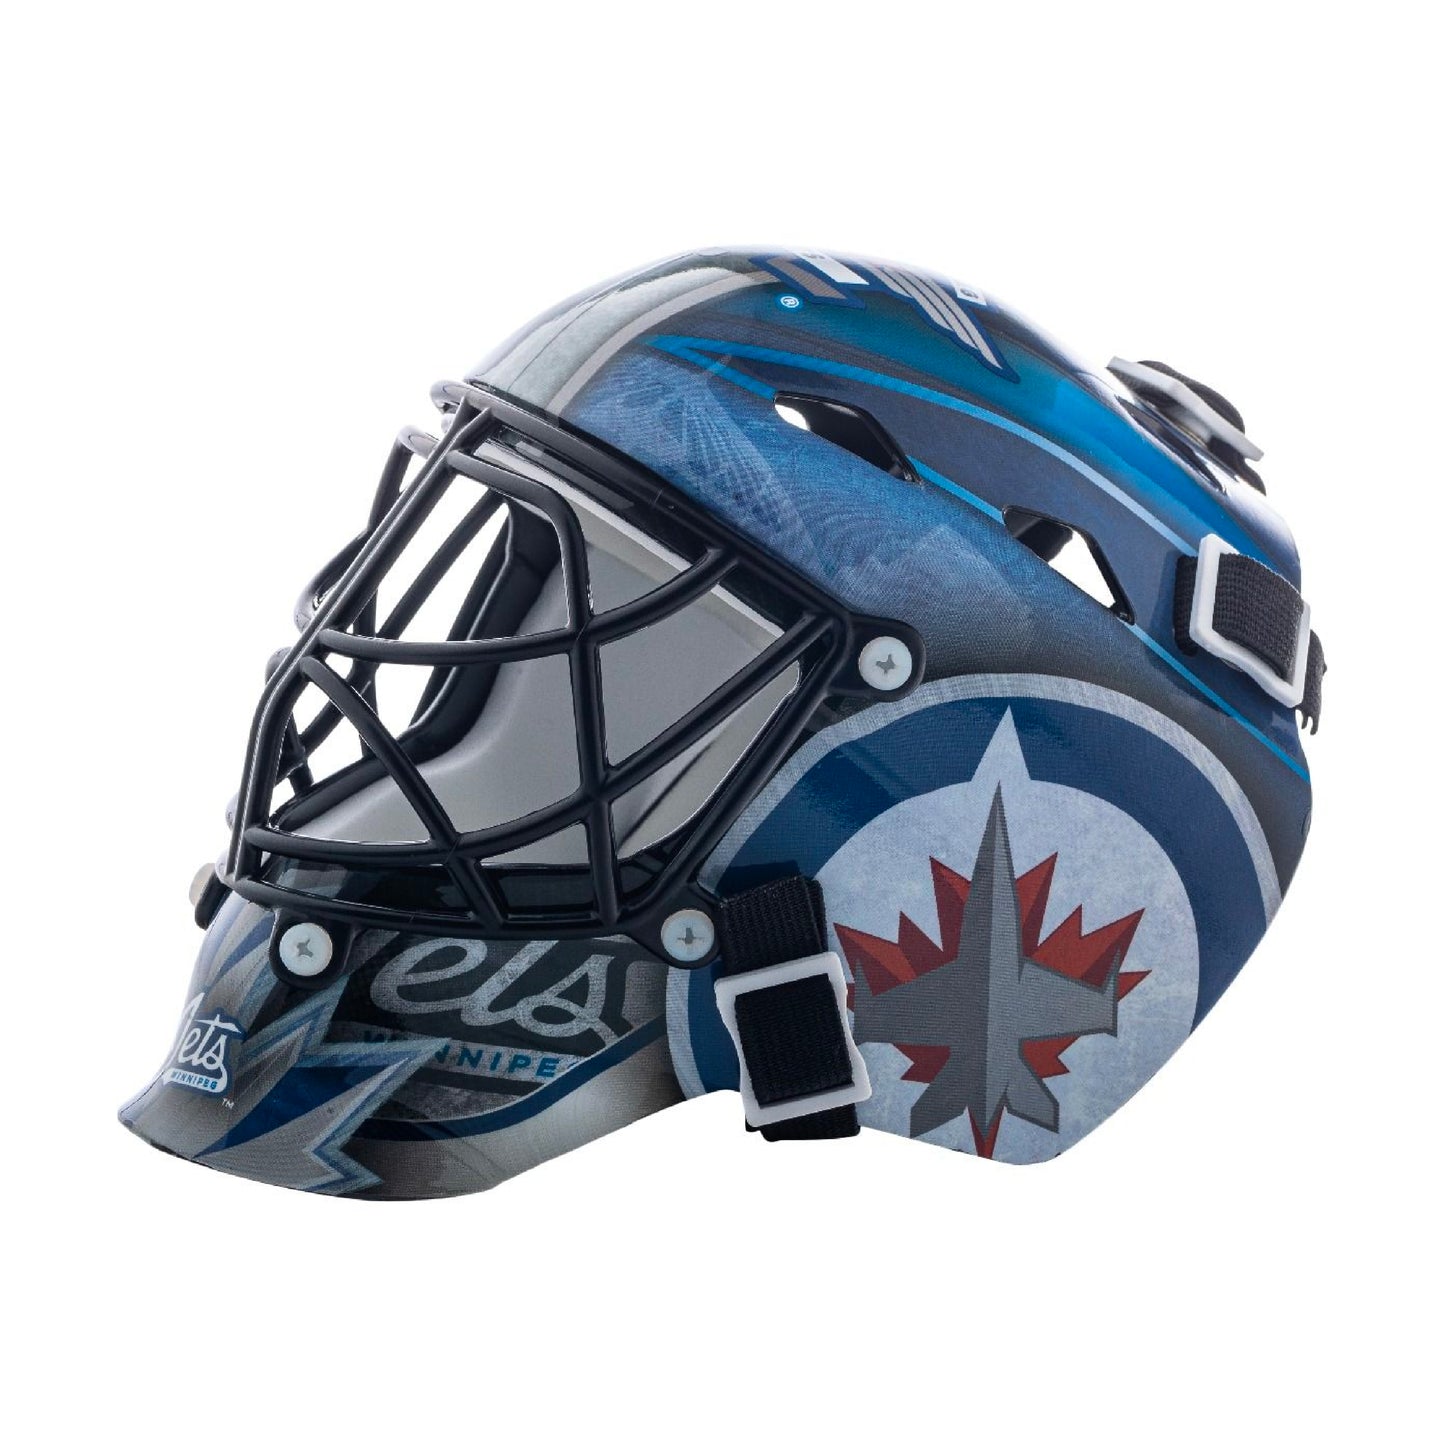 Winnipeg Jets Mini Goalie Mask